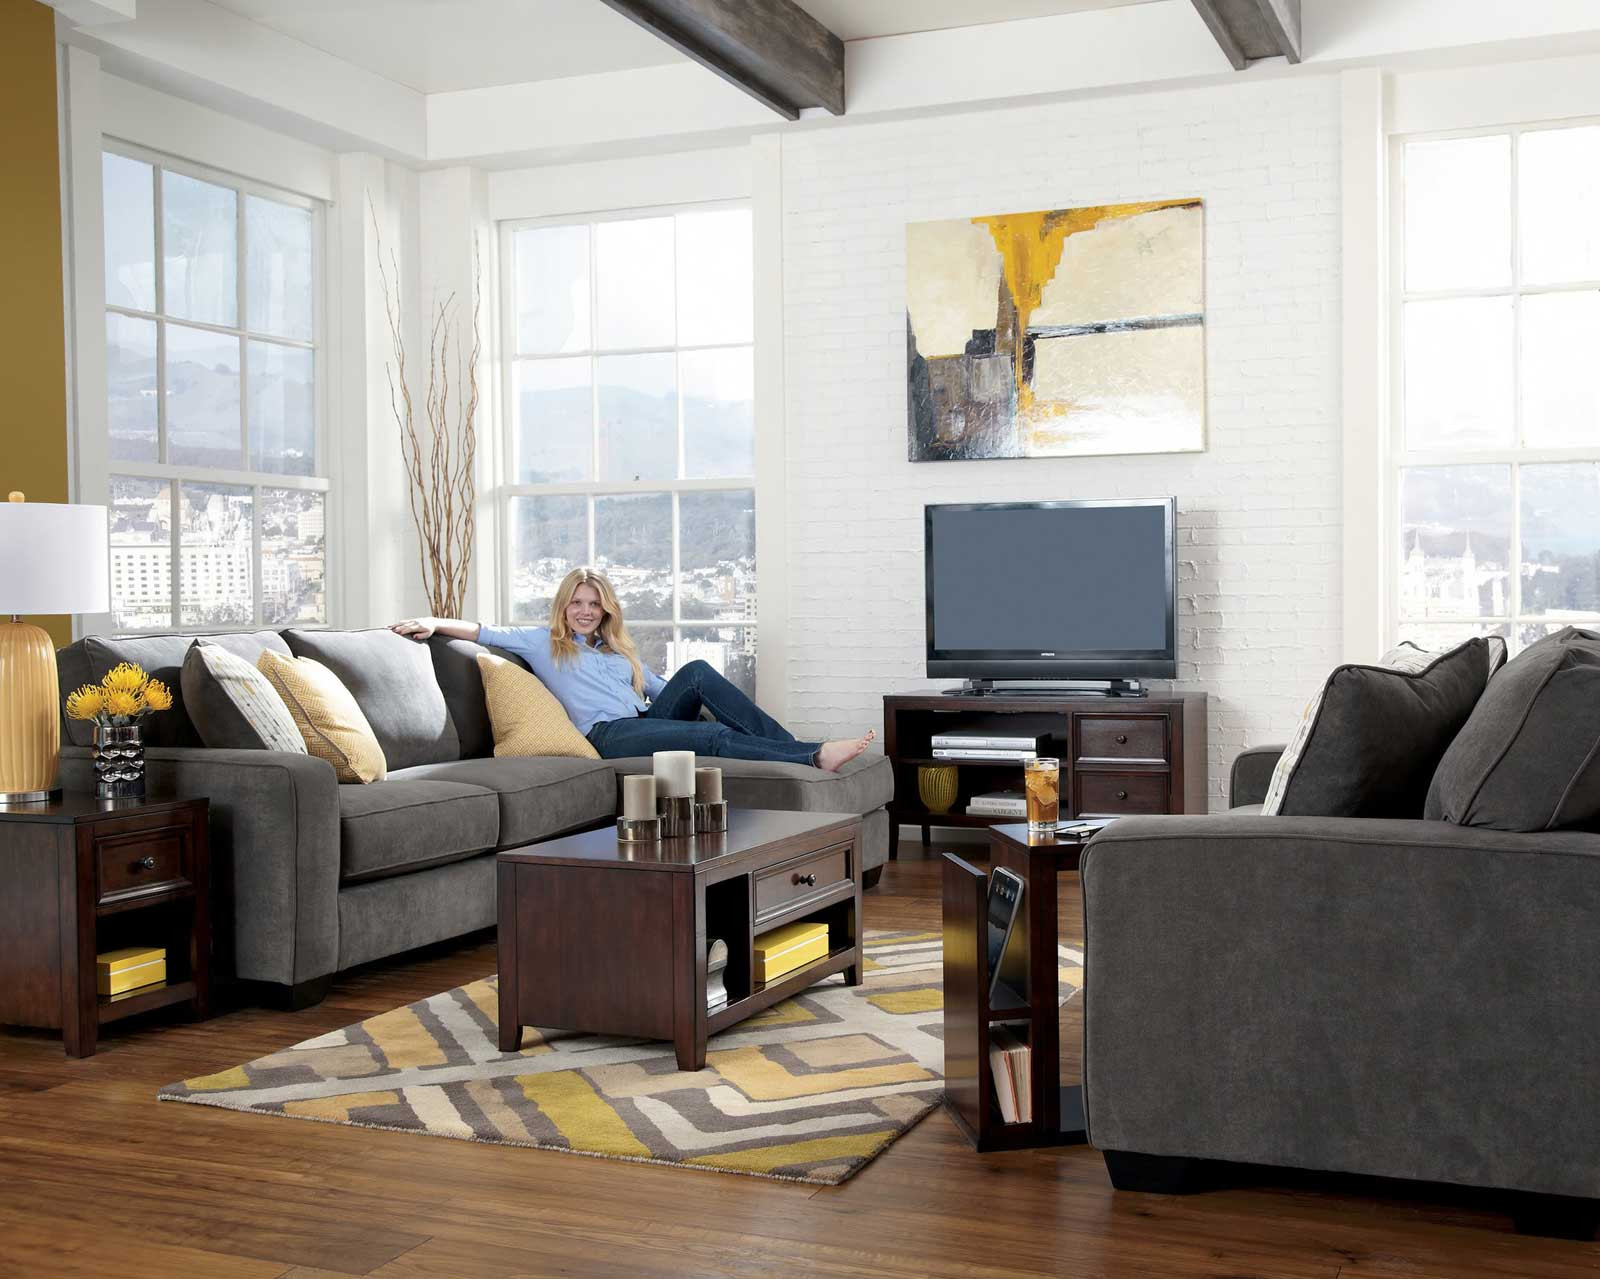 Living Room Sets Ideas
 Beautiful Living Room Sets As Suitable Furniture Amaza